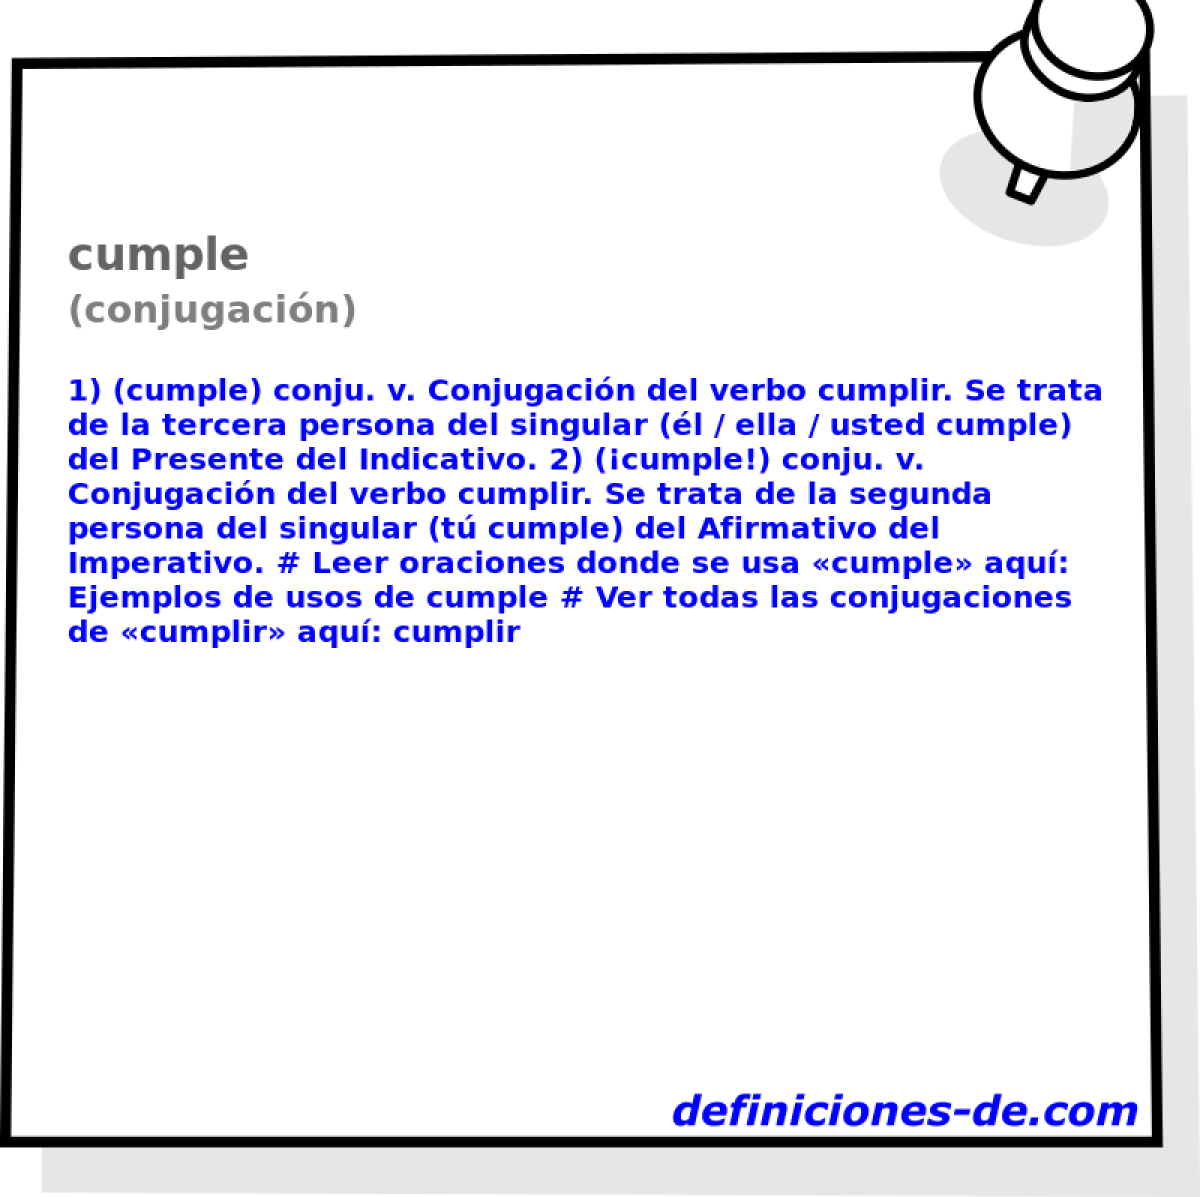 cumple (conjugacin)